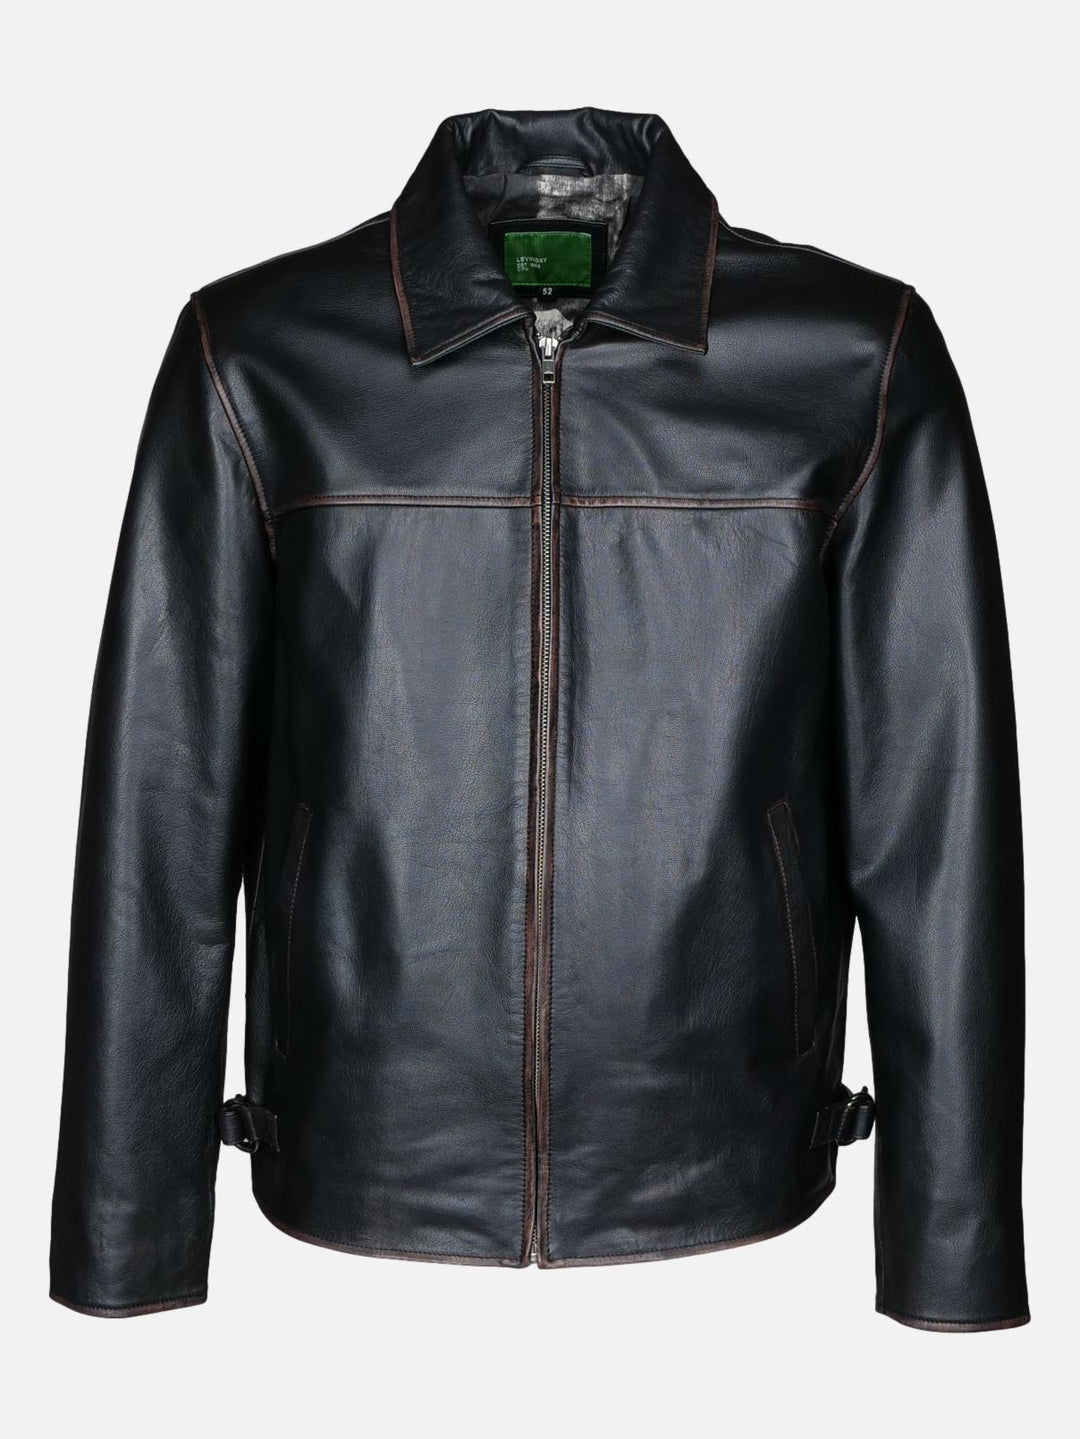 James Dean - Goat Rubbed Off Leather Jacket - Man - Black